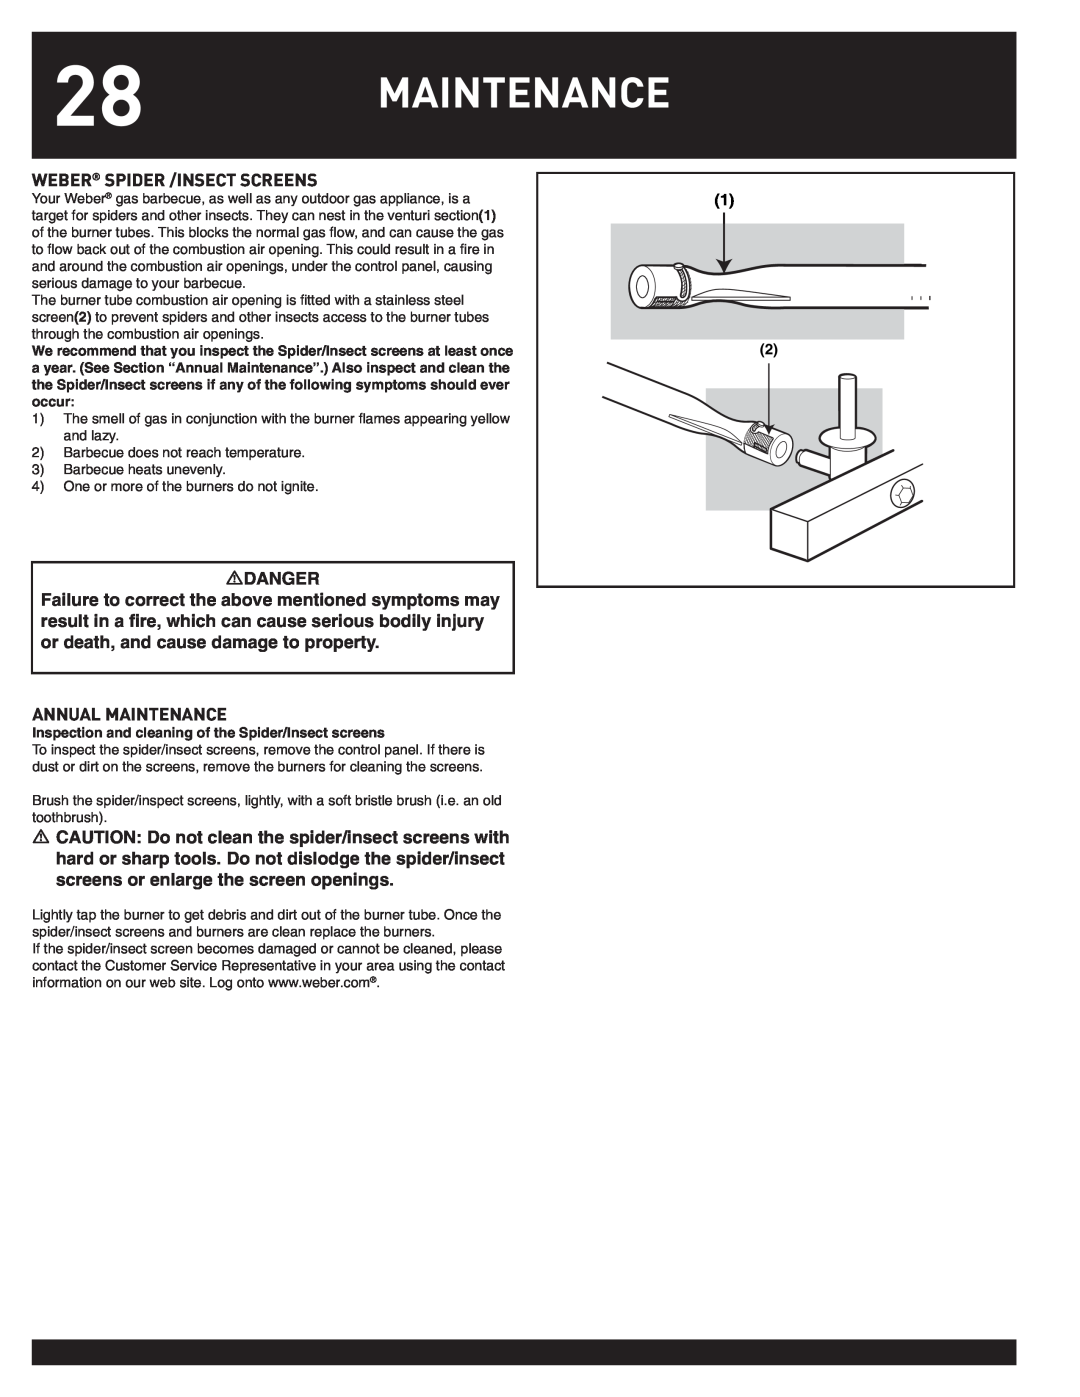 Weber SUMMIT manual Maintenance 